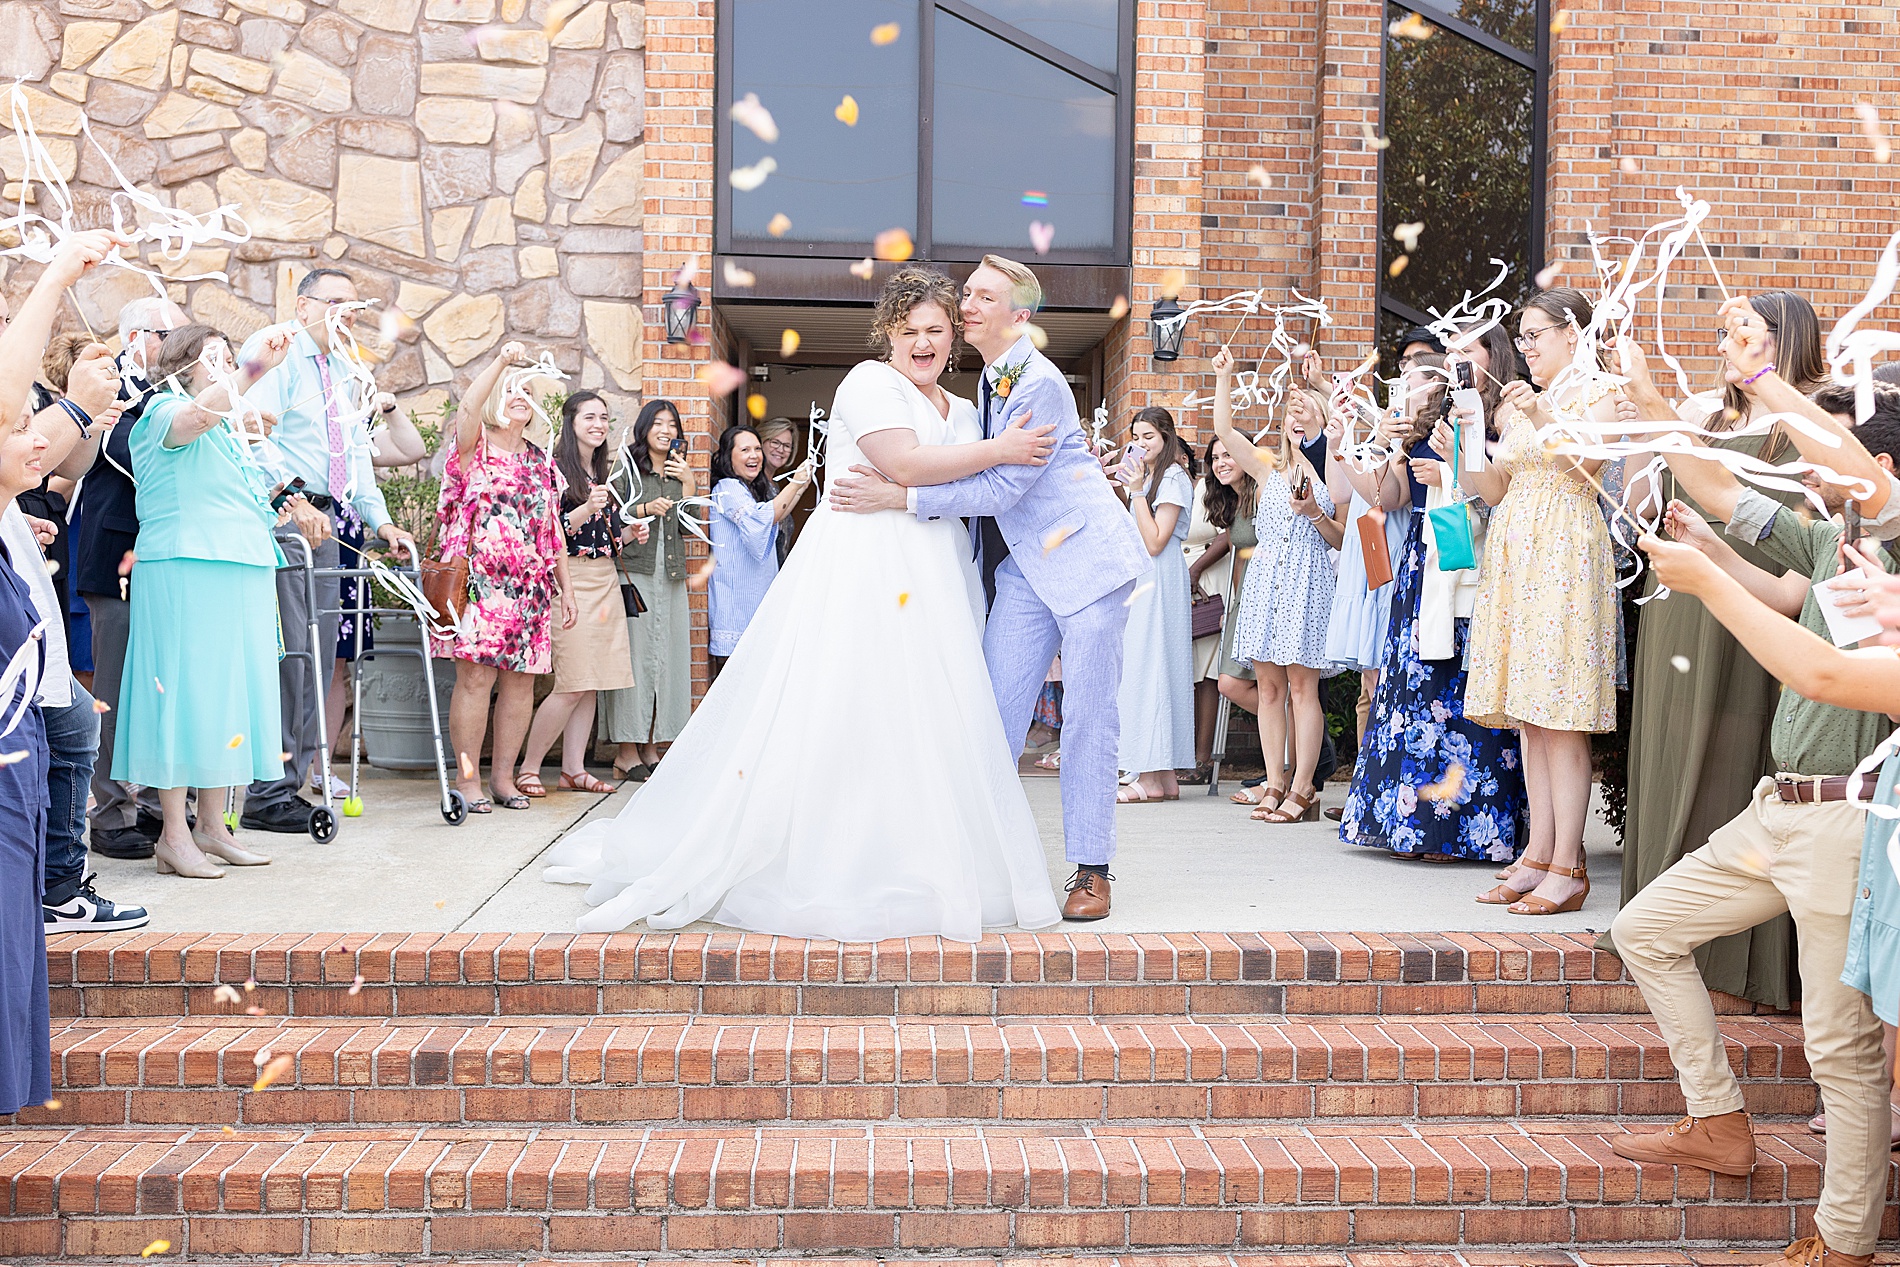 wedding guests throw confetti as newlyweds exit church